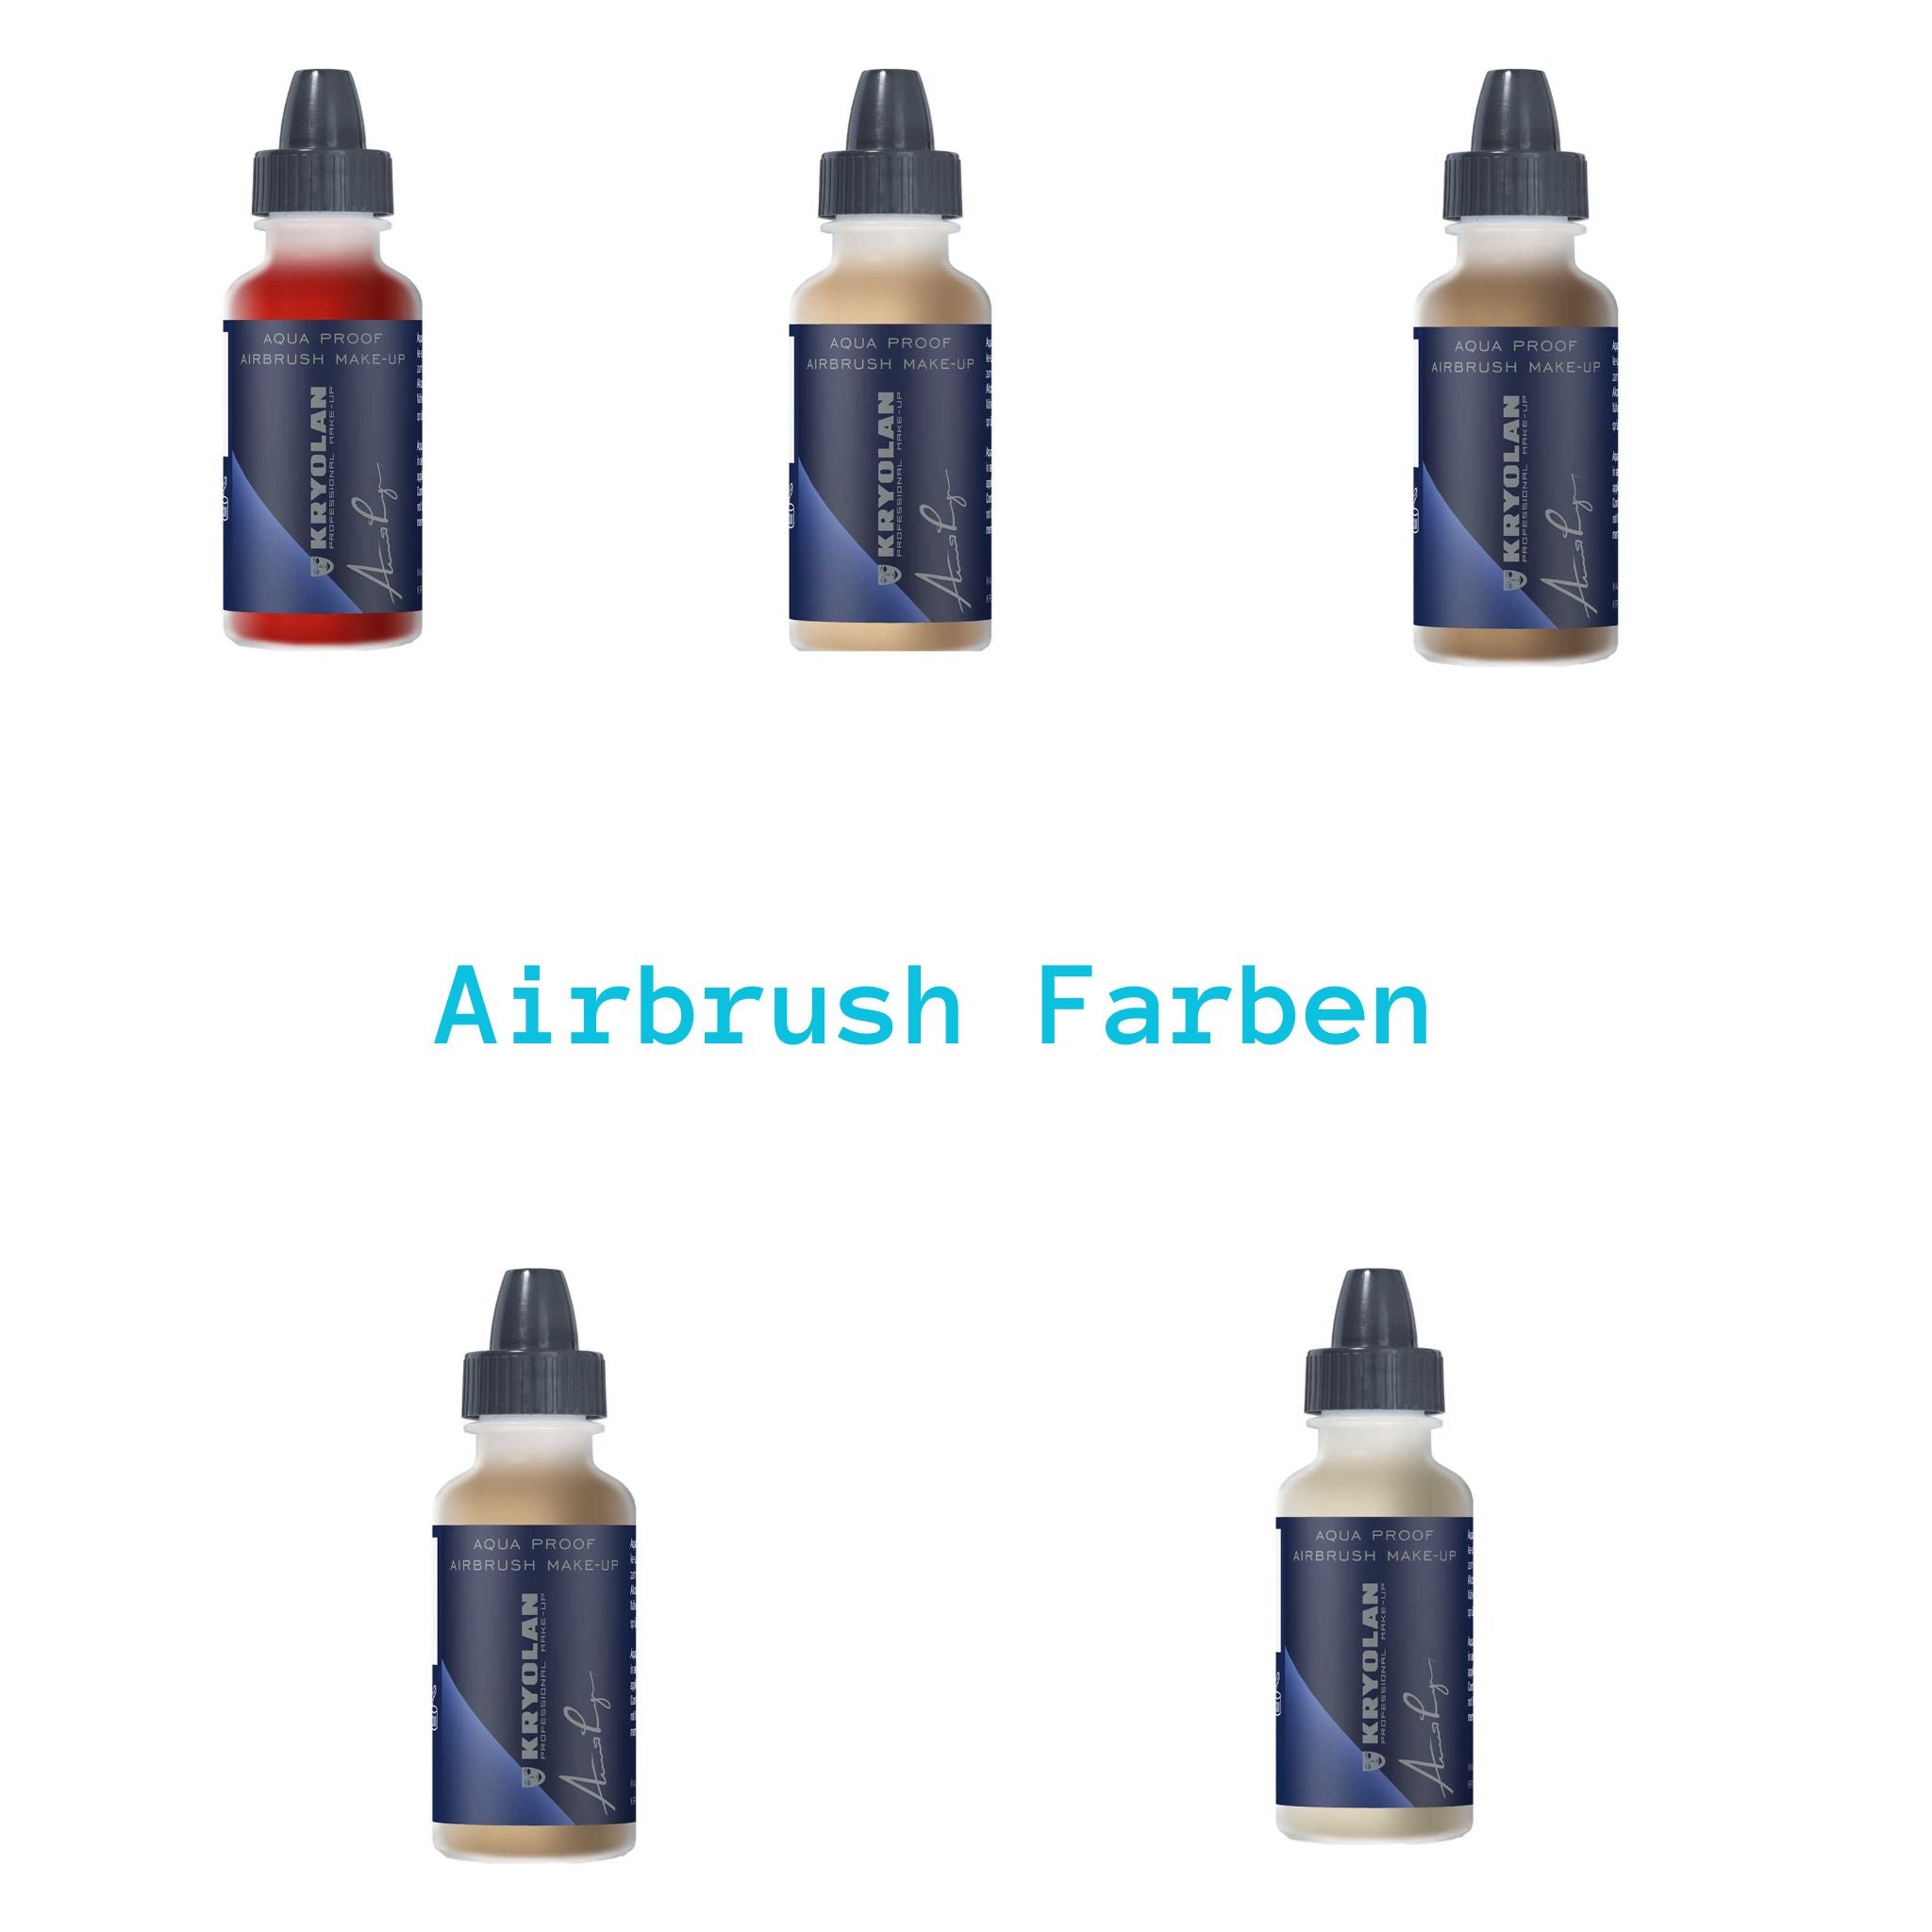 Airbrush Set